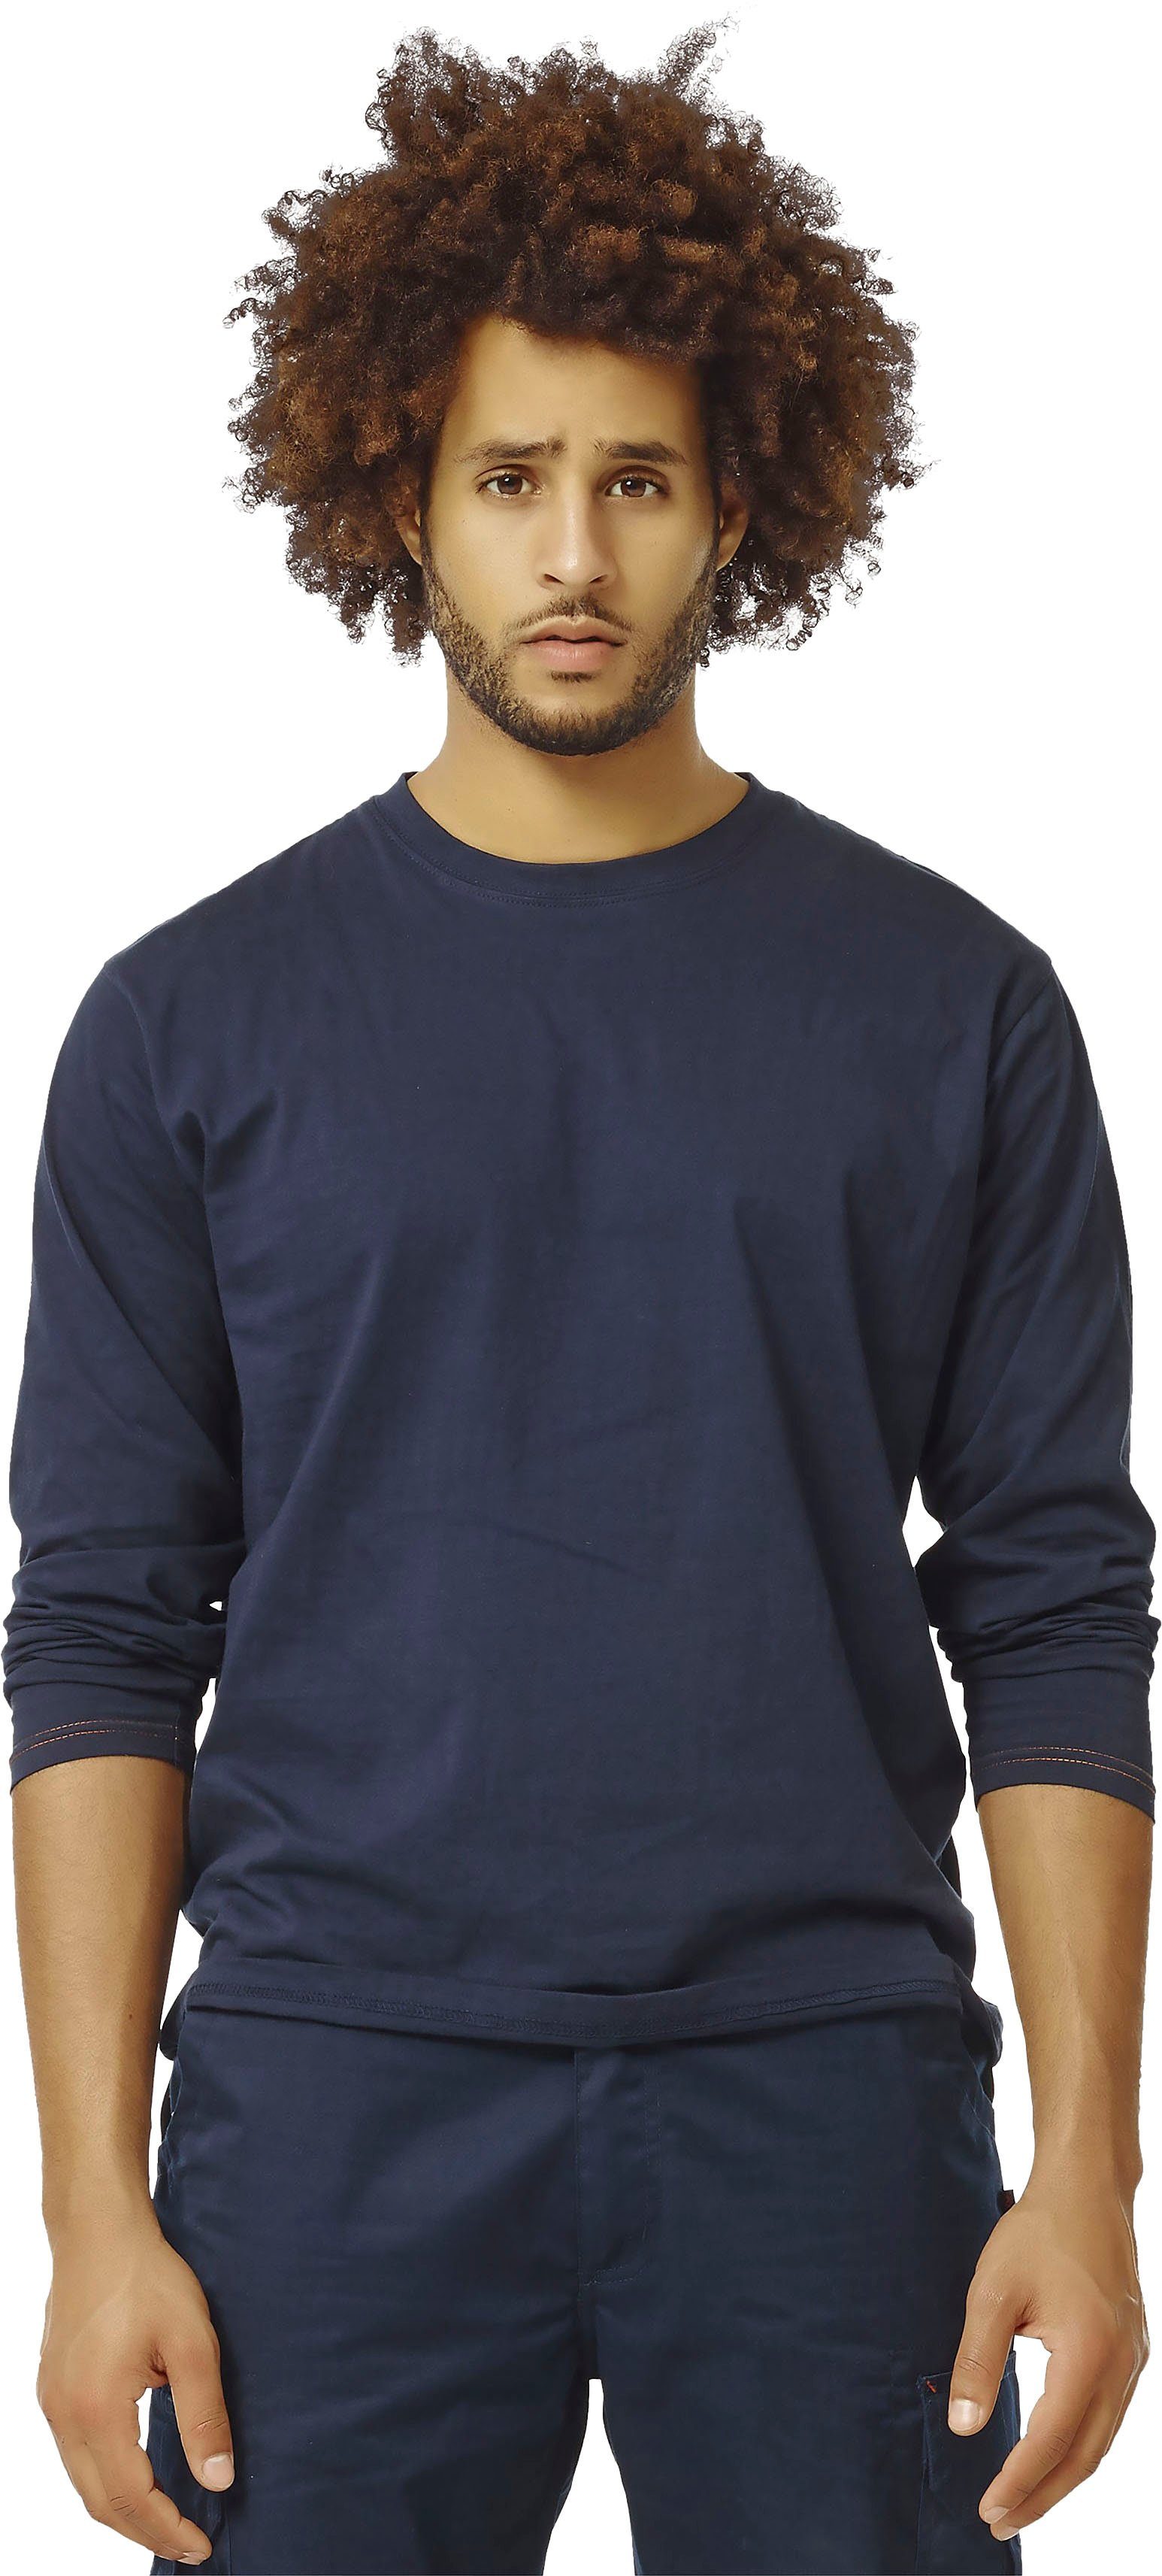 t-shirt marine 100 Baumwolle, langärmlig % vorgeschrumpfte Noet Basic Herock Langarmshirt Tragegefühl, angenehmes